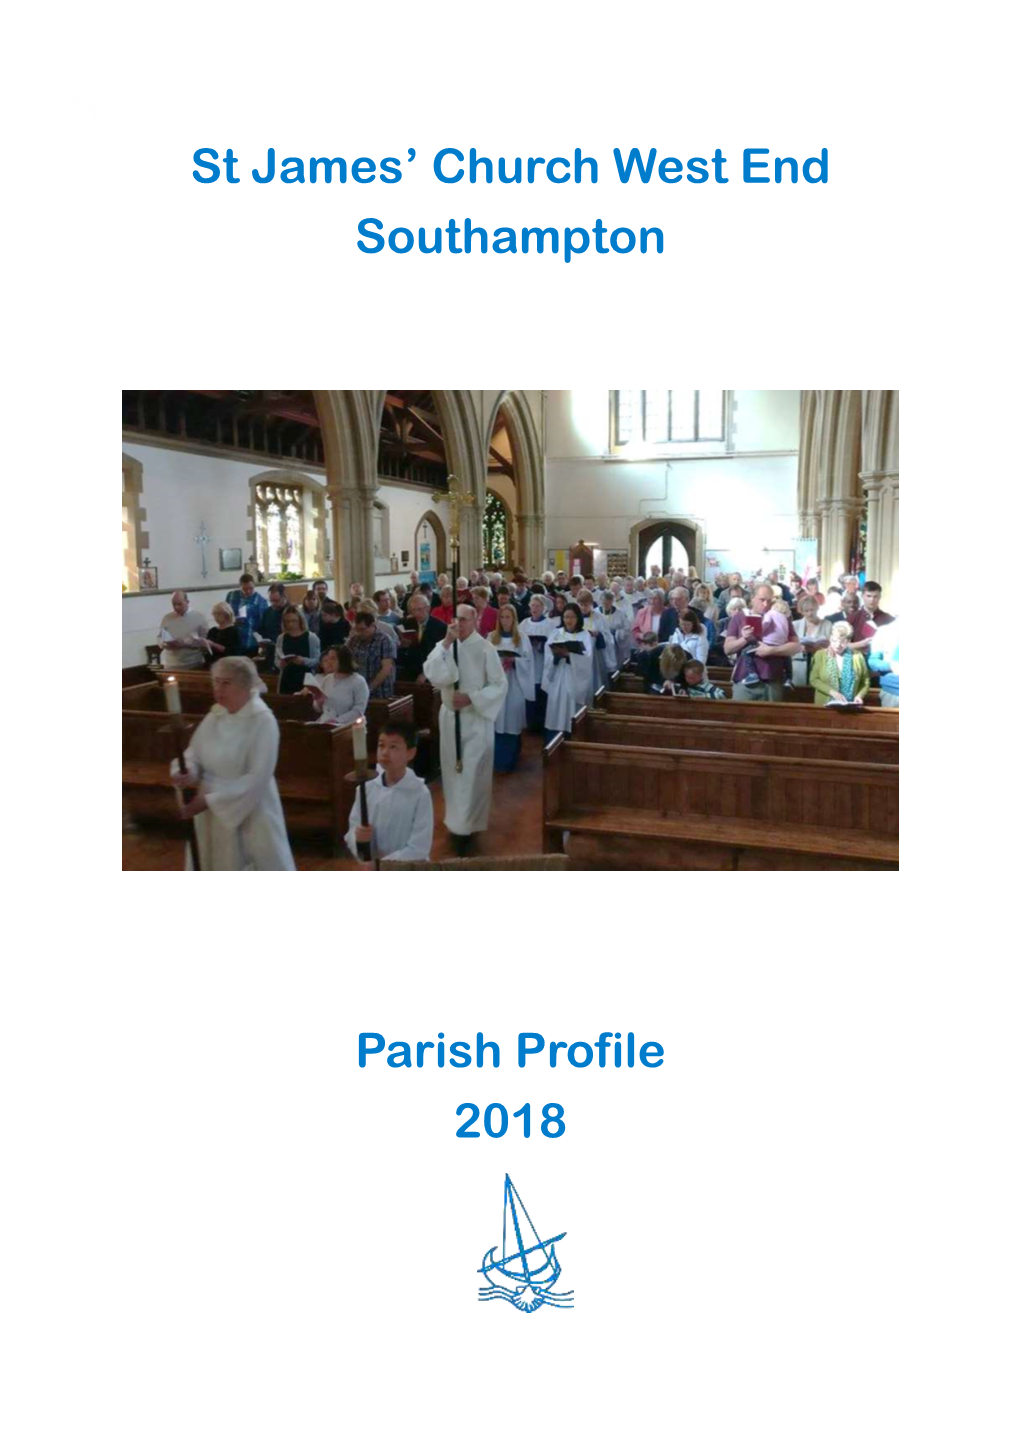 St Jamesr Church West End Southampton Parish Profile 2018